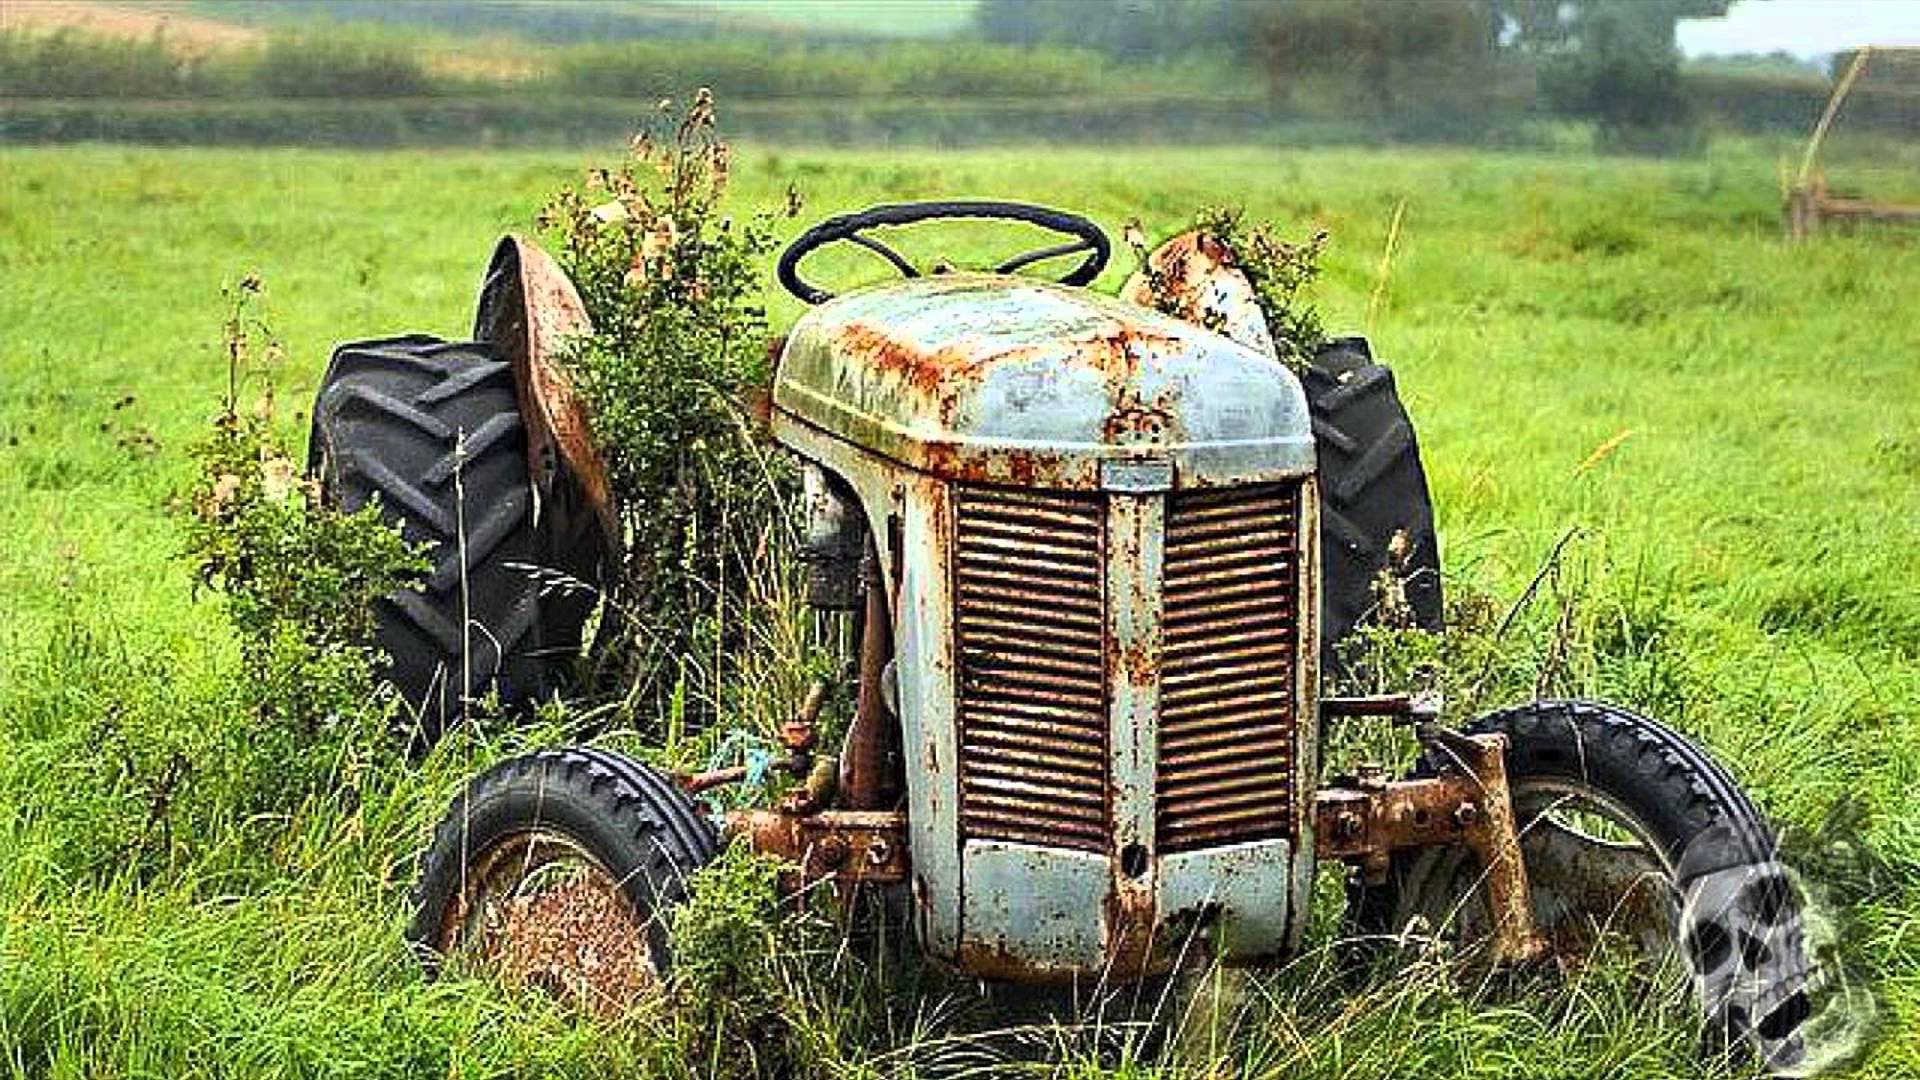 The Abandoned Farm Tractors 2016. Creepy Old Rusty Tractors. - YouTube